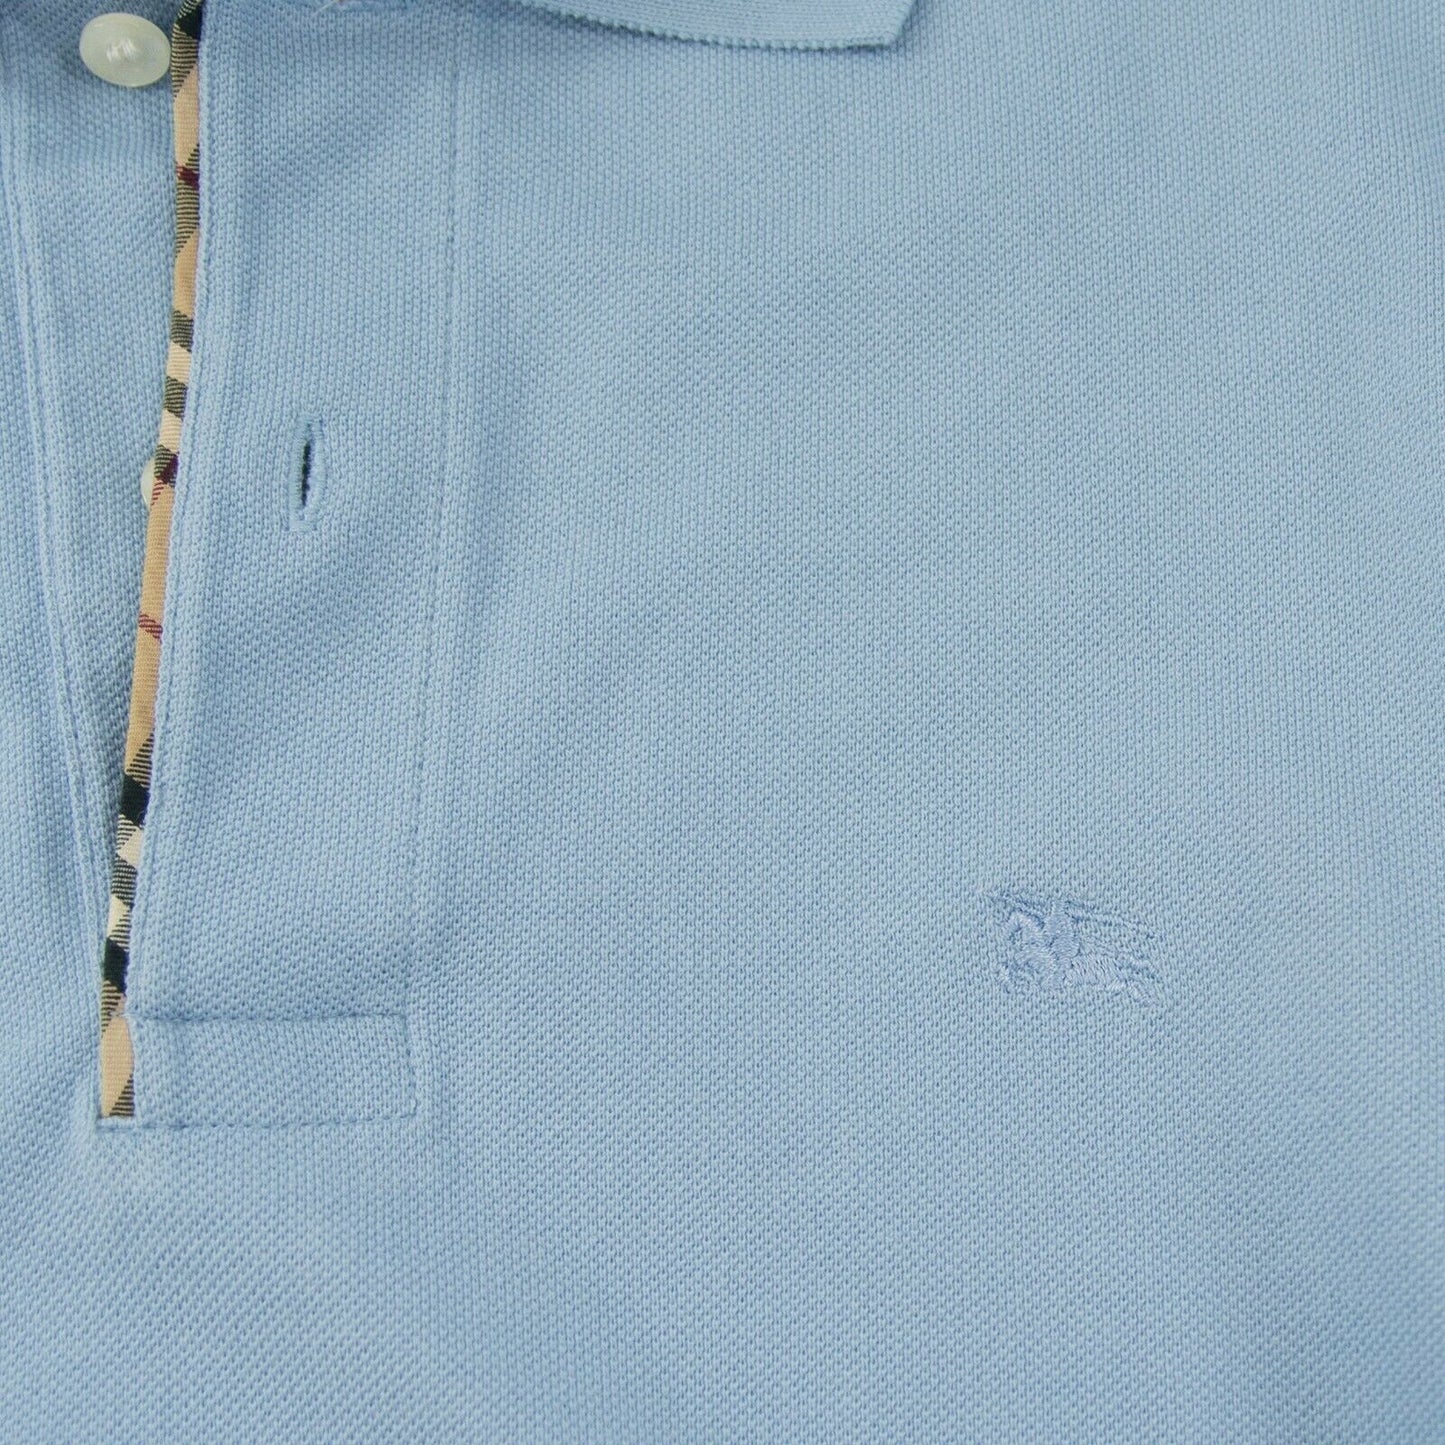 Burberry Pale Blue Waffle Weave Knit Polo Cotton Shirt M EUC